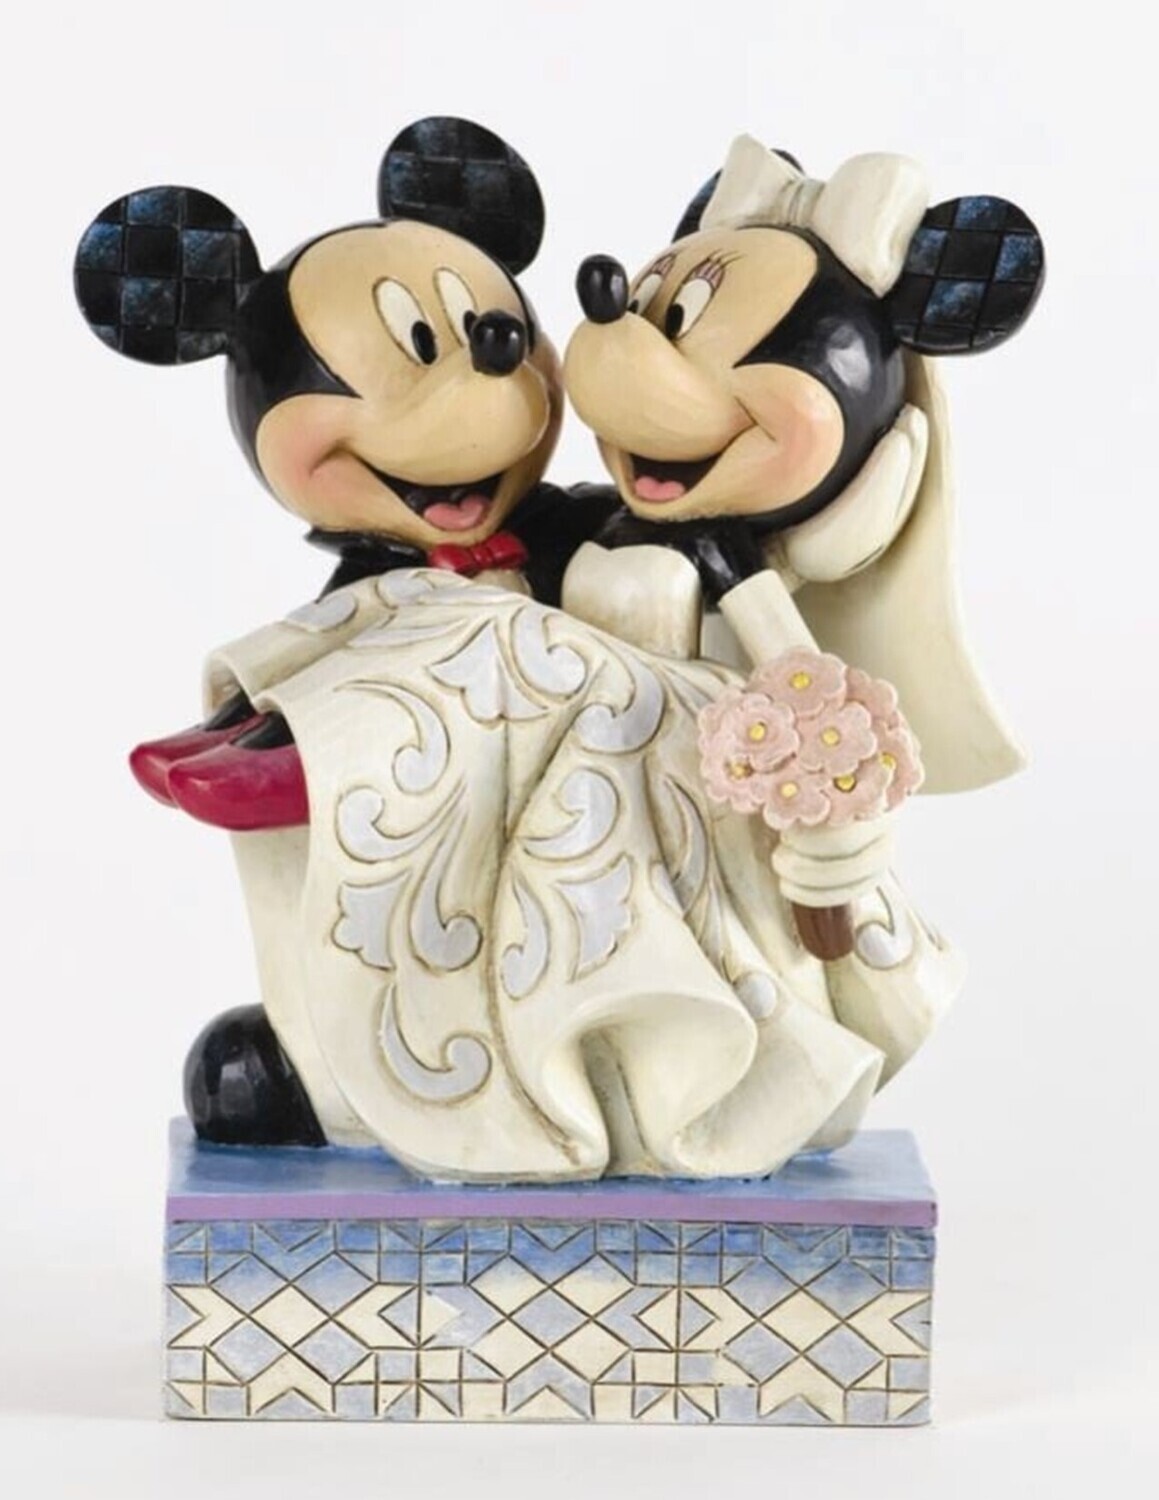 Jim Shore Disney Traditions "Mickey and Minnie Wedding Congratulations" Figurine / Cake Topper (4033282)